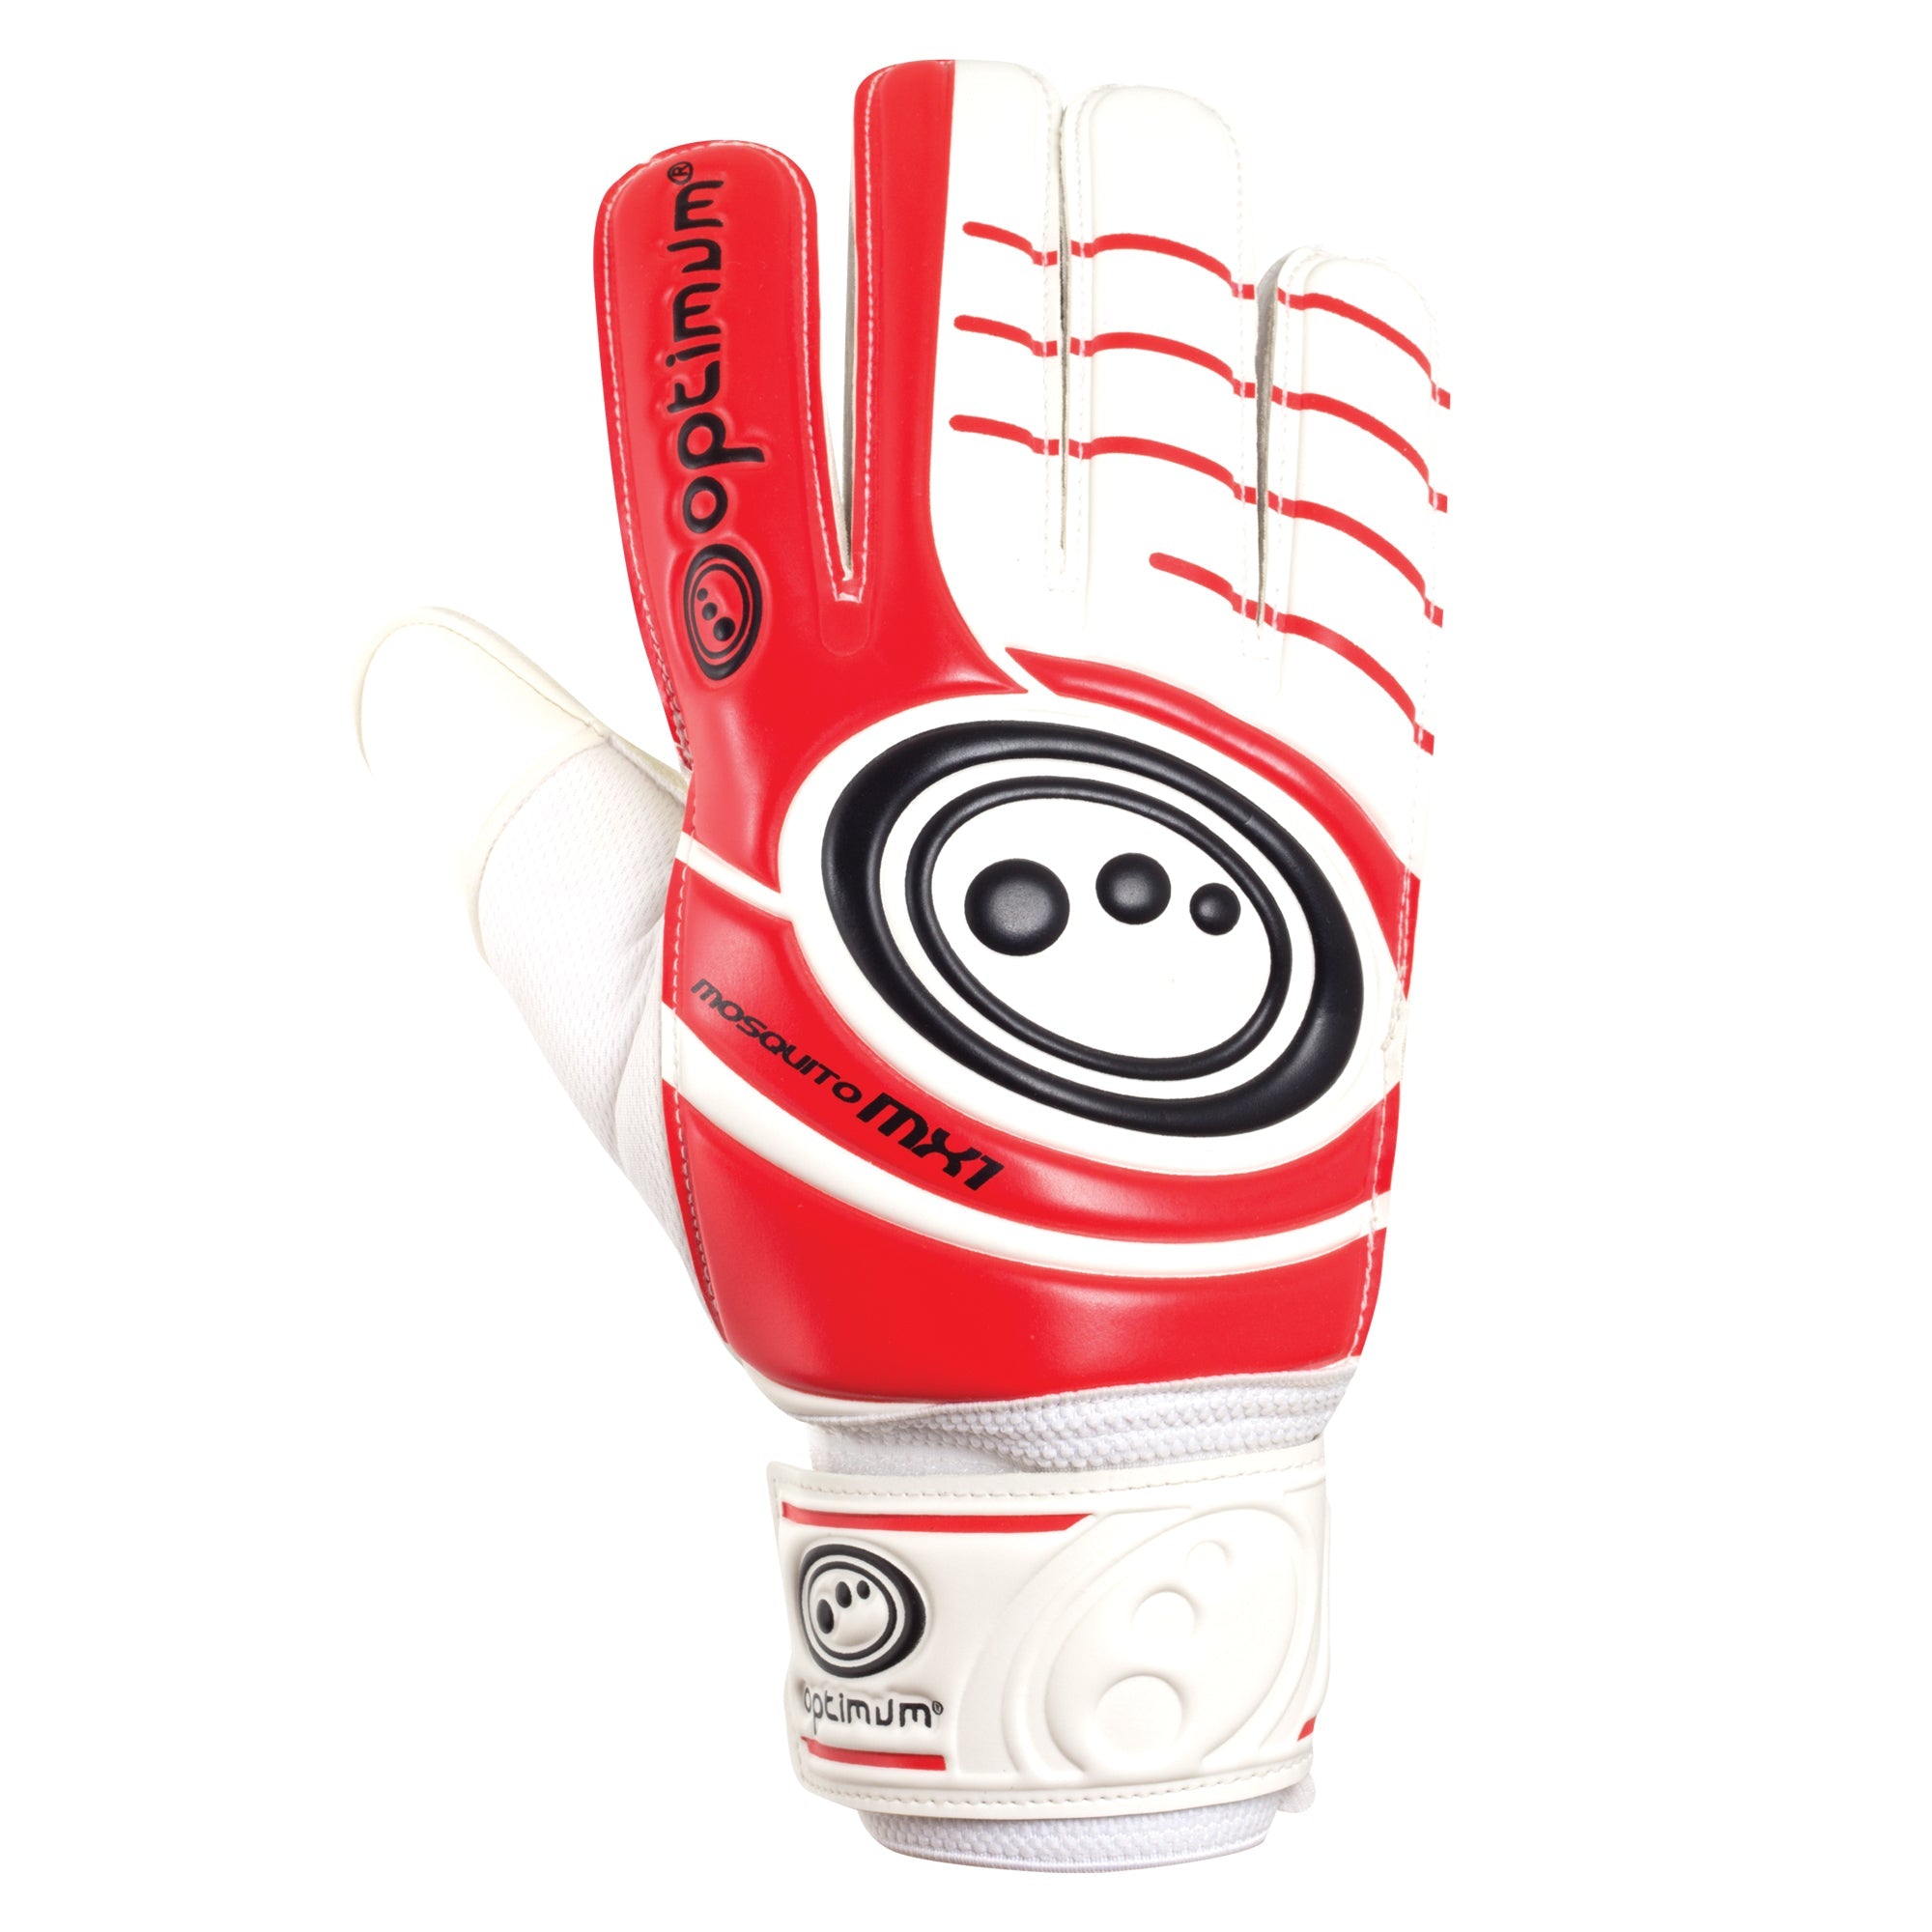 Mosquito MX1 Goalkeeper Glove - Optimum